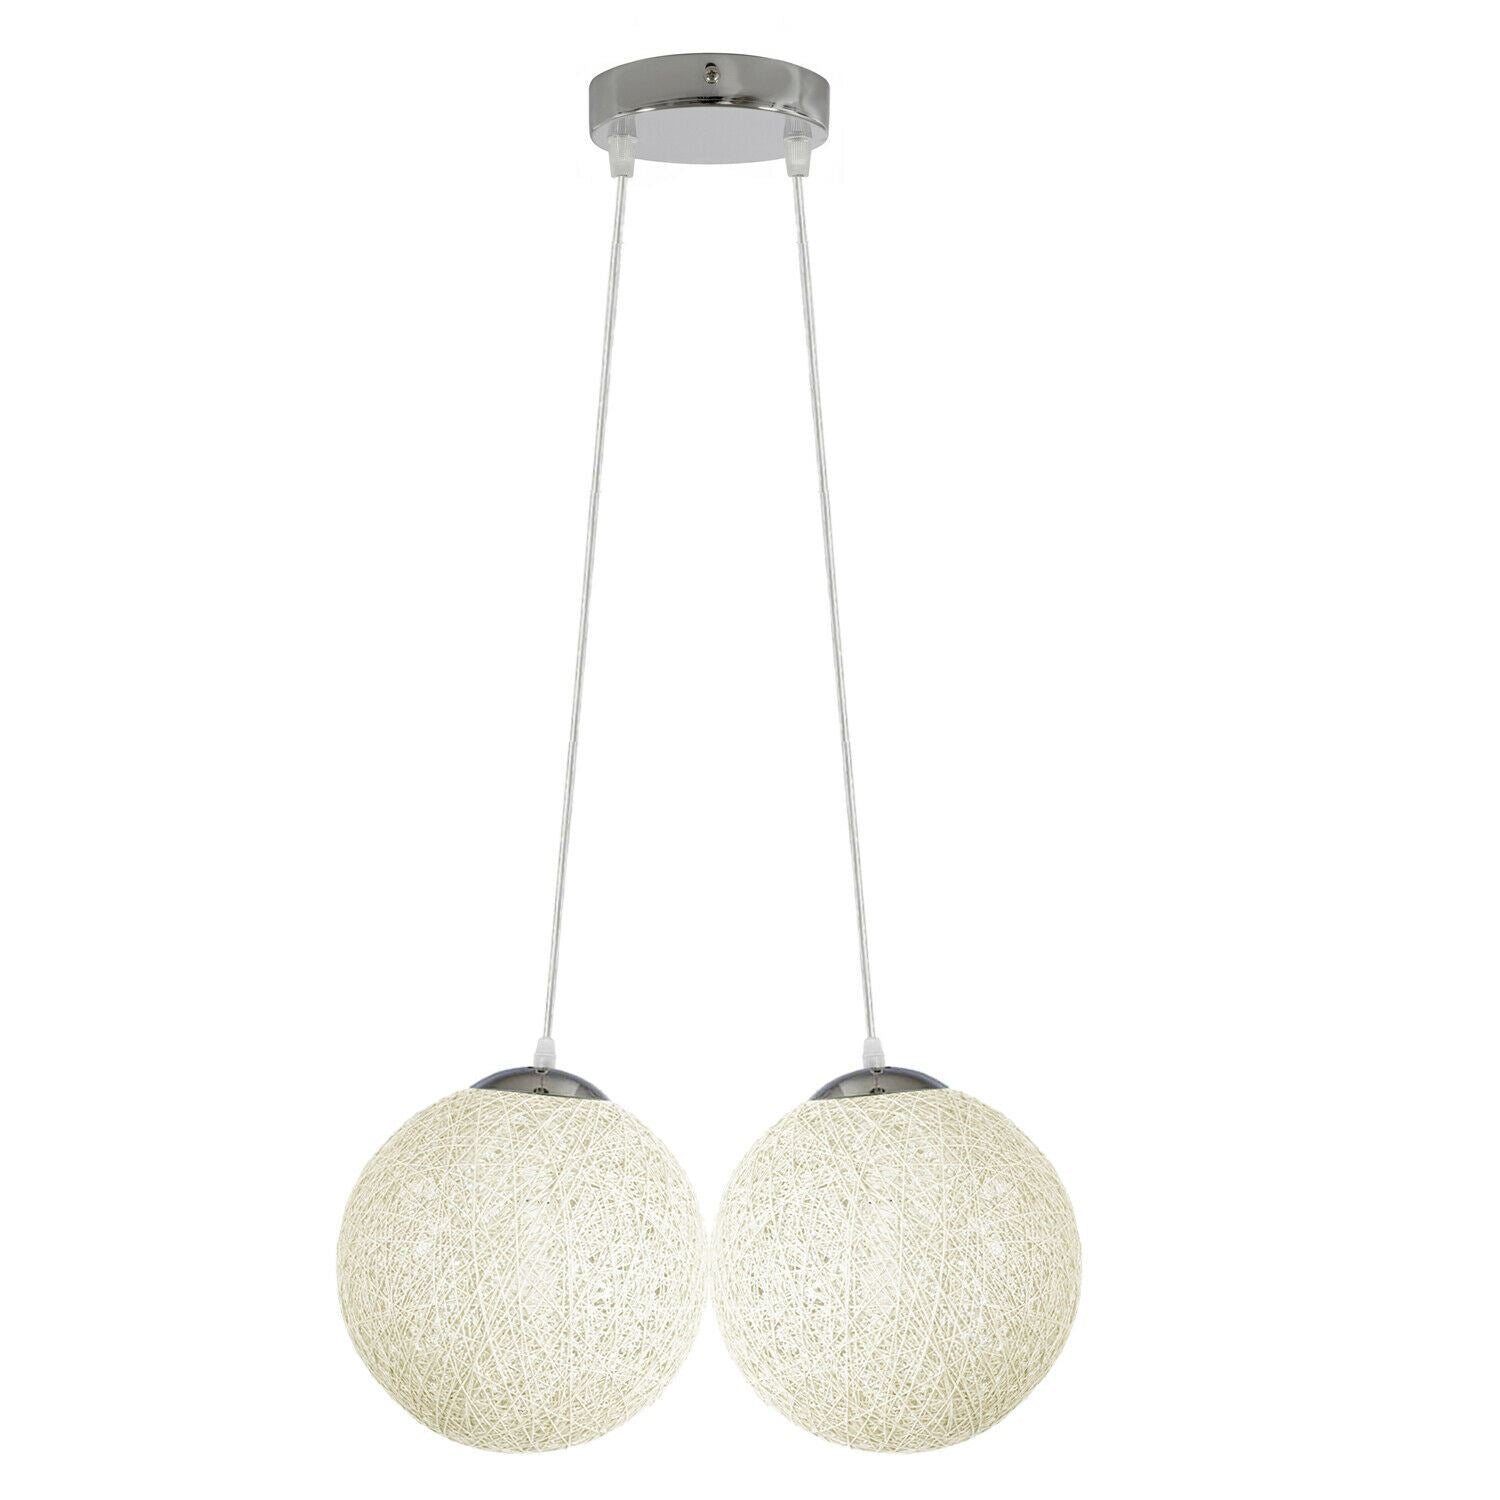 Modern Industrial Rattan Wicker Woven Ball Globe Two Outlet Pendant Light Hanging Ceiling Lamp For Bedroom, Kitchen, Study room~1331 - LEDSone UK Ltd